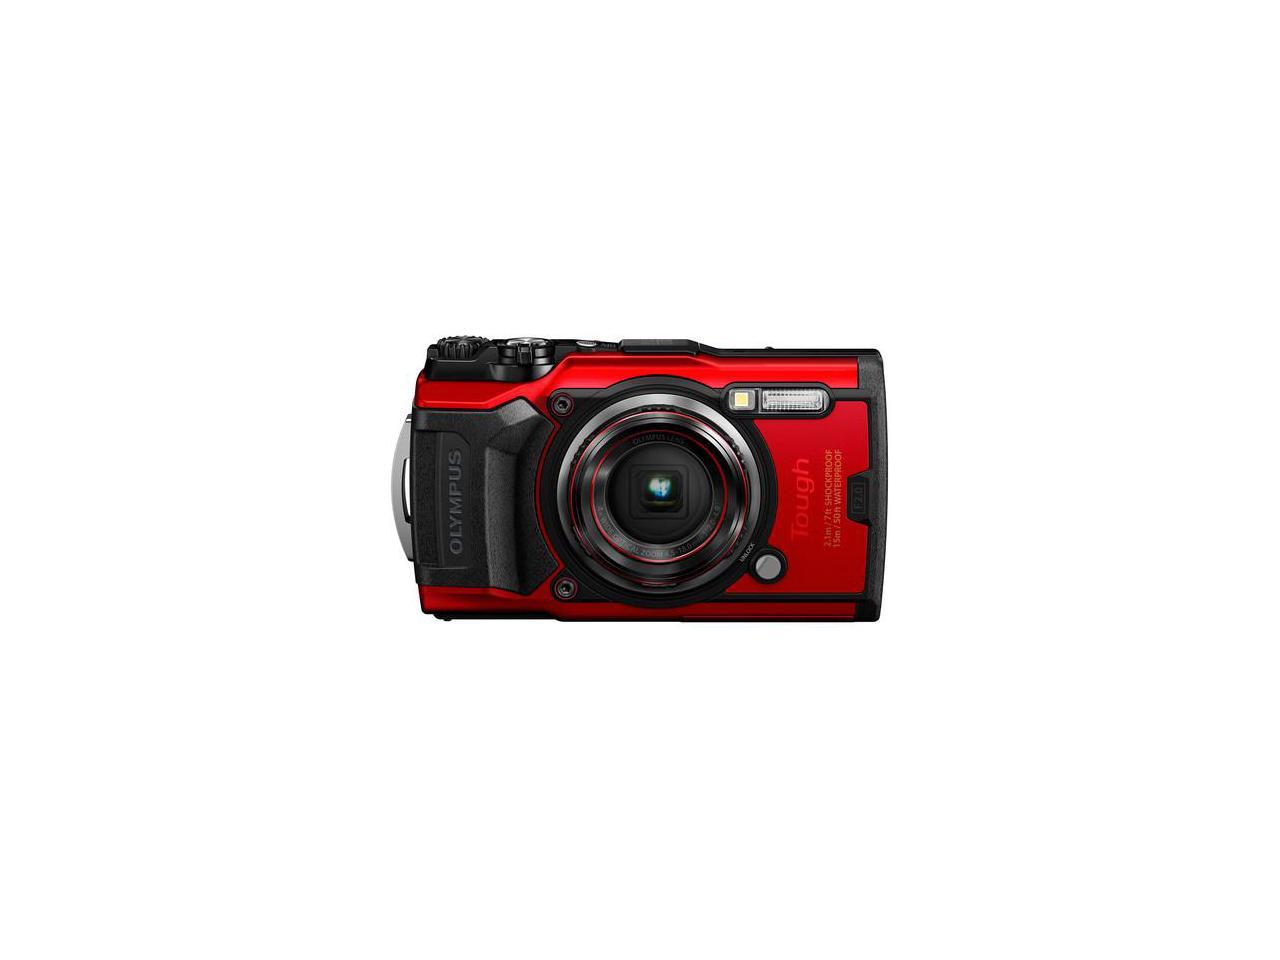 Olympus Tough TG-6 Digital Camera Essentials Bundle (Red)